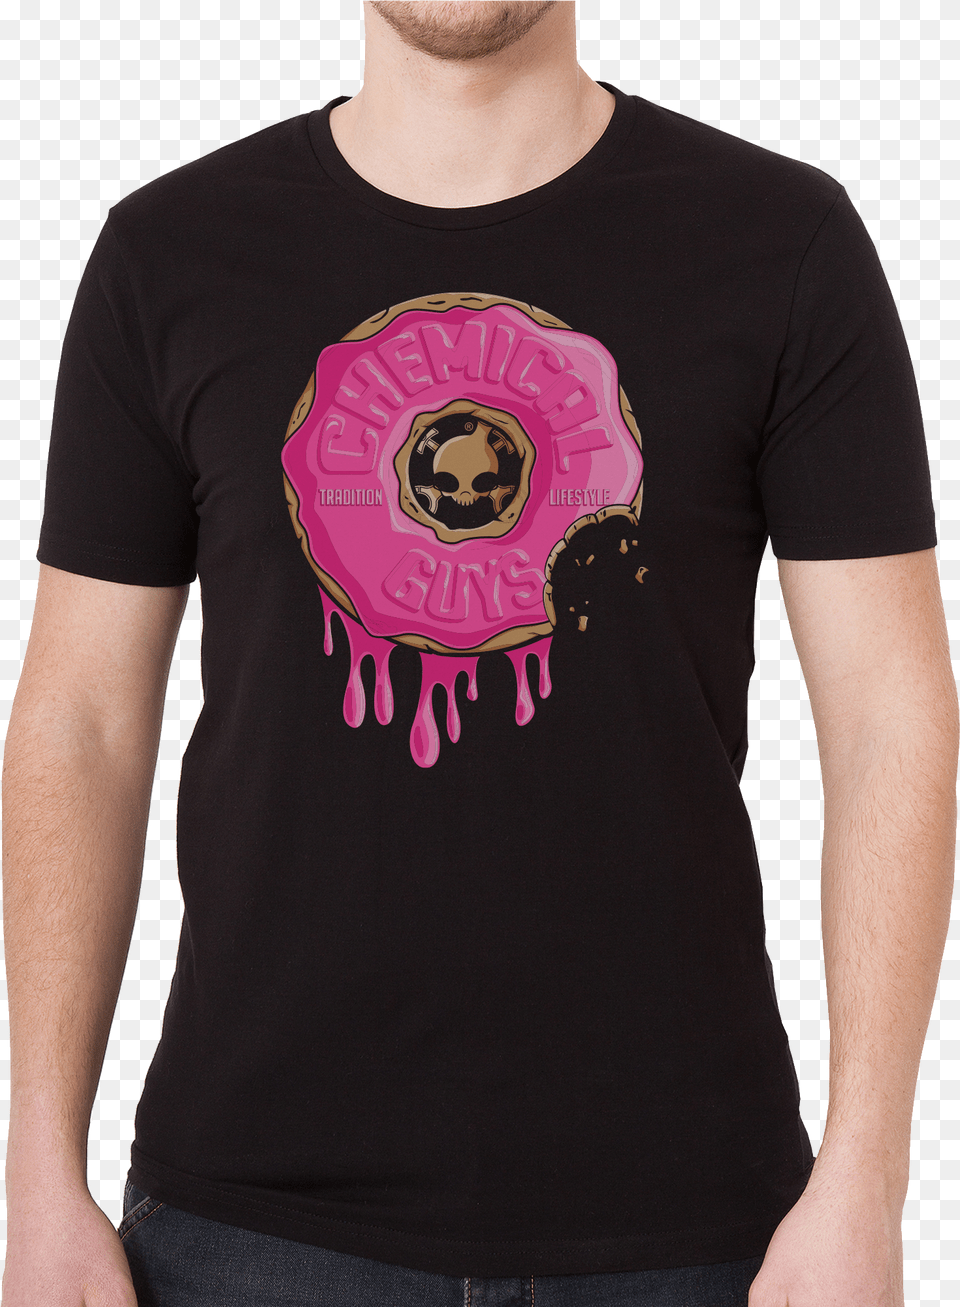 Fresh Glazed Doughnut Shirt Camiseta Joker Why So Serious, Clothing, T-shirt Free Png Download